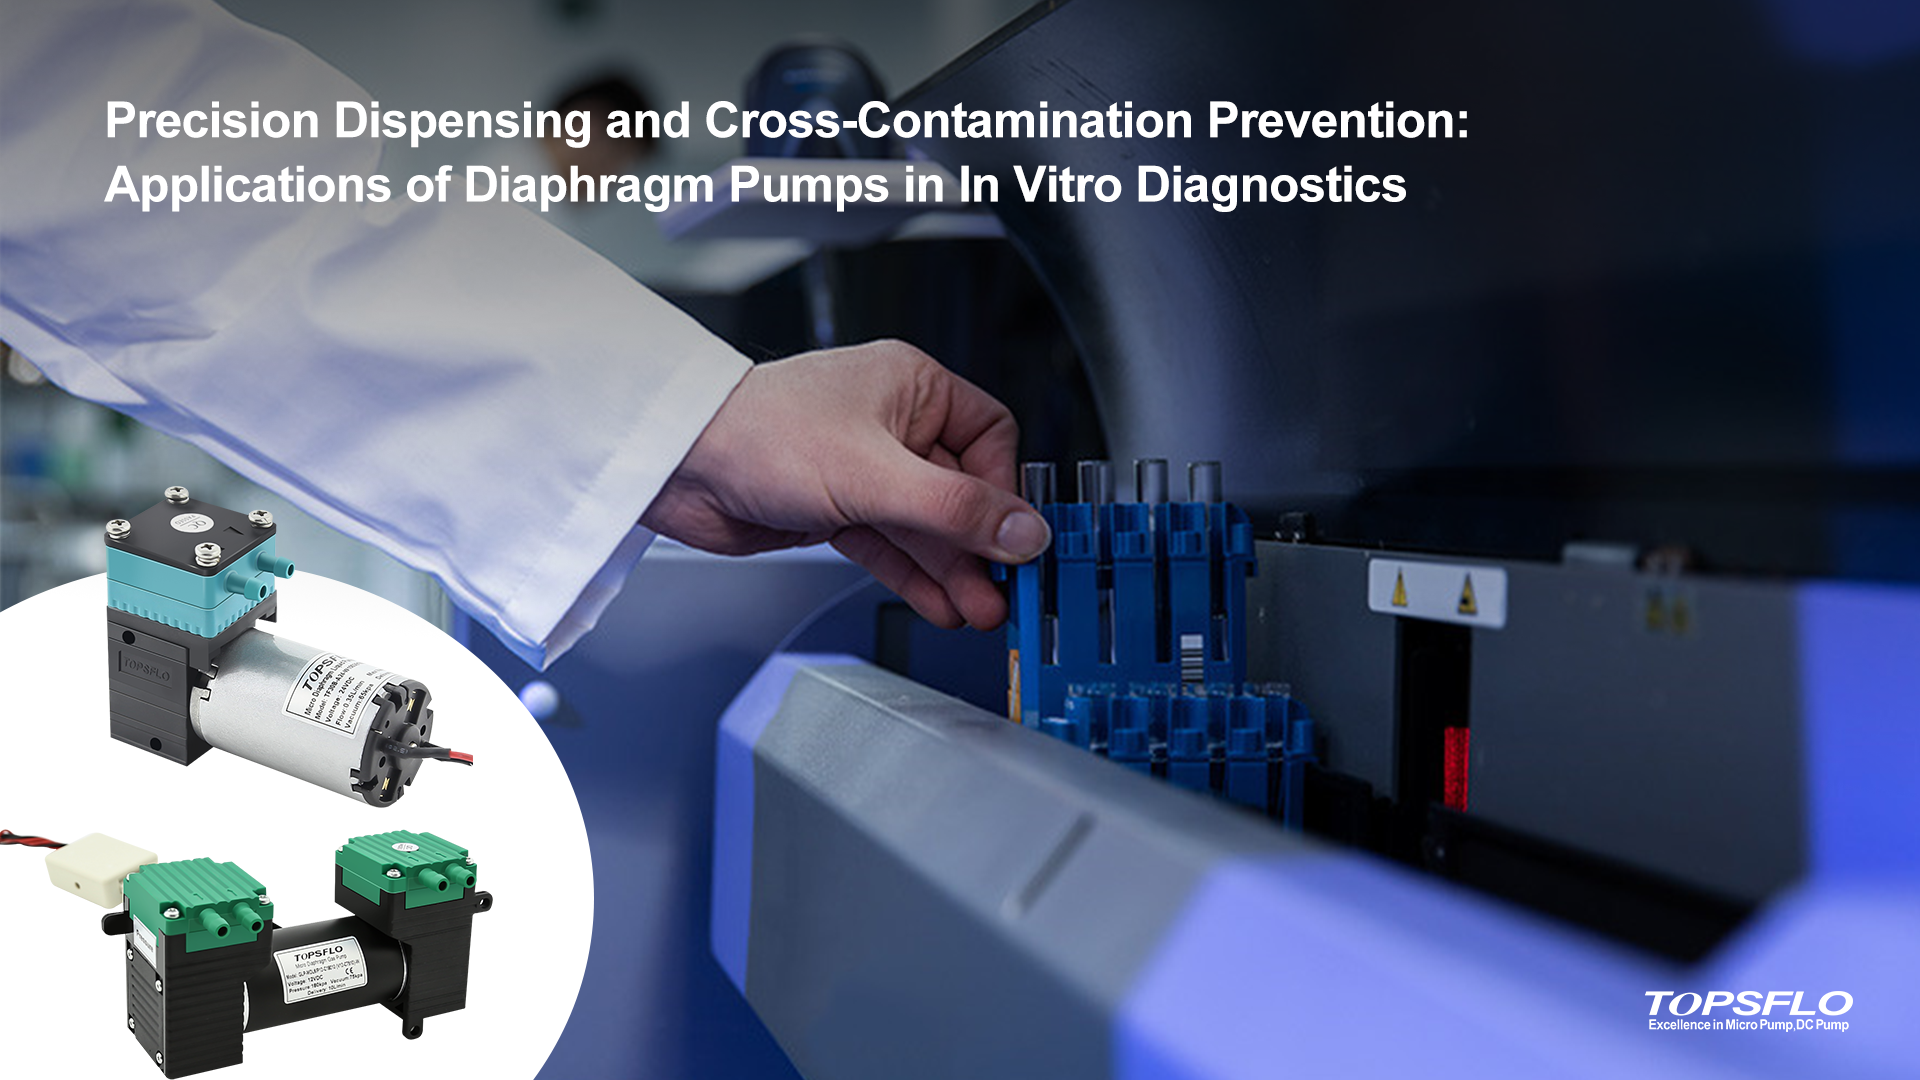 Micro diaphragm pumps IVD pumps